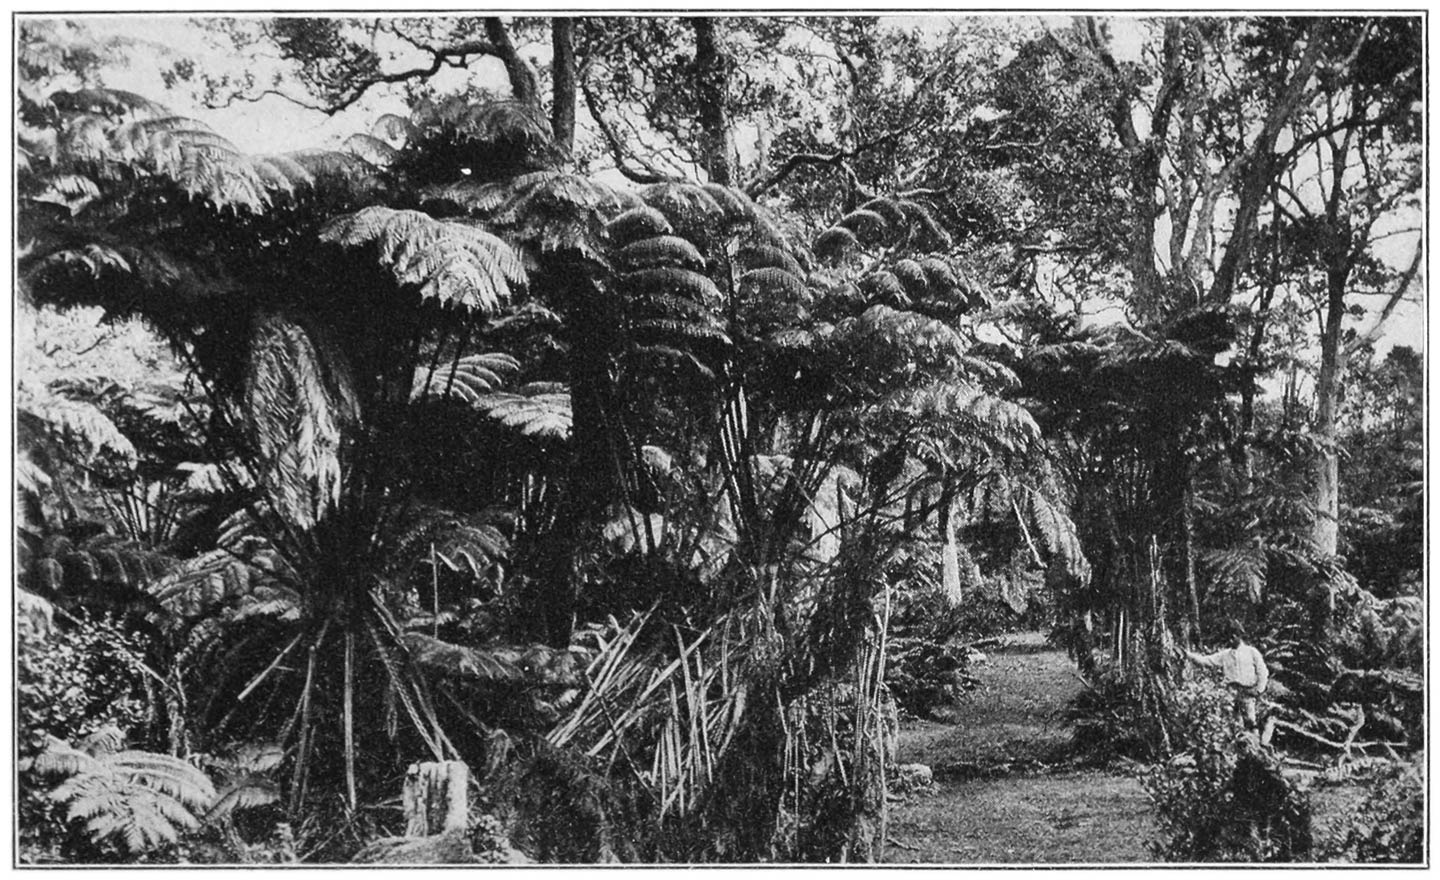 GIANT TREE FERNS ON THE ROAD TO KILAUEA